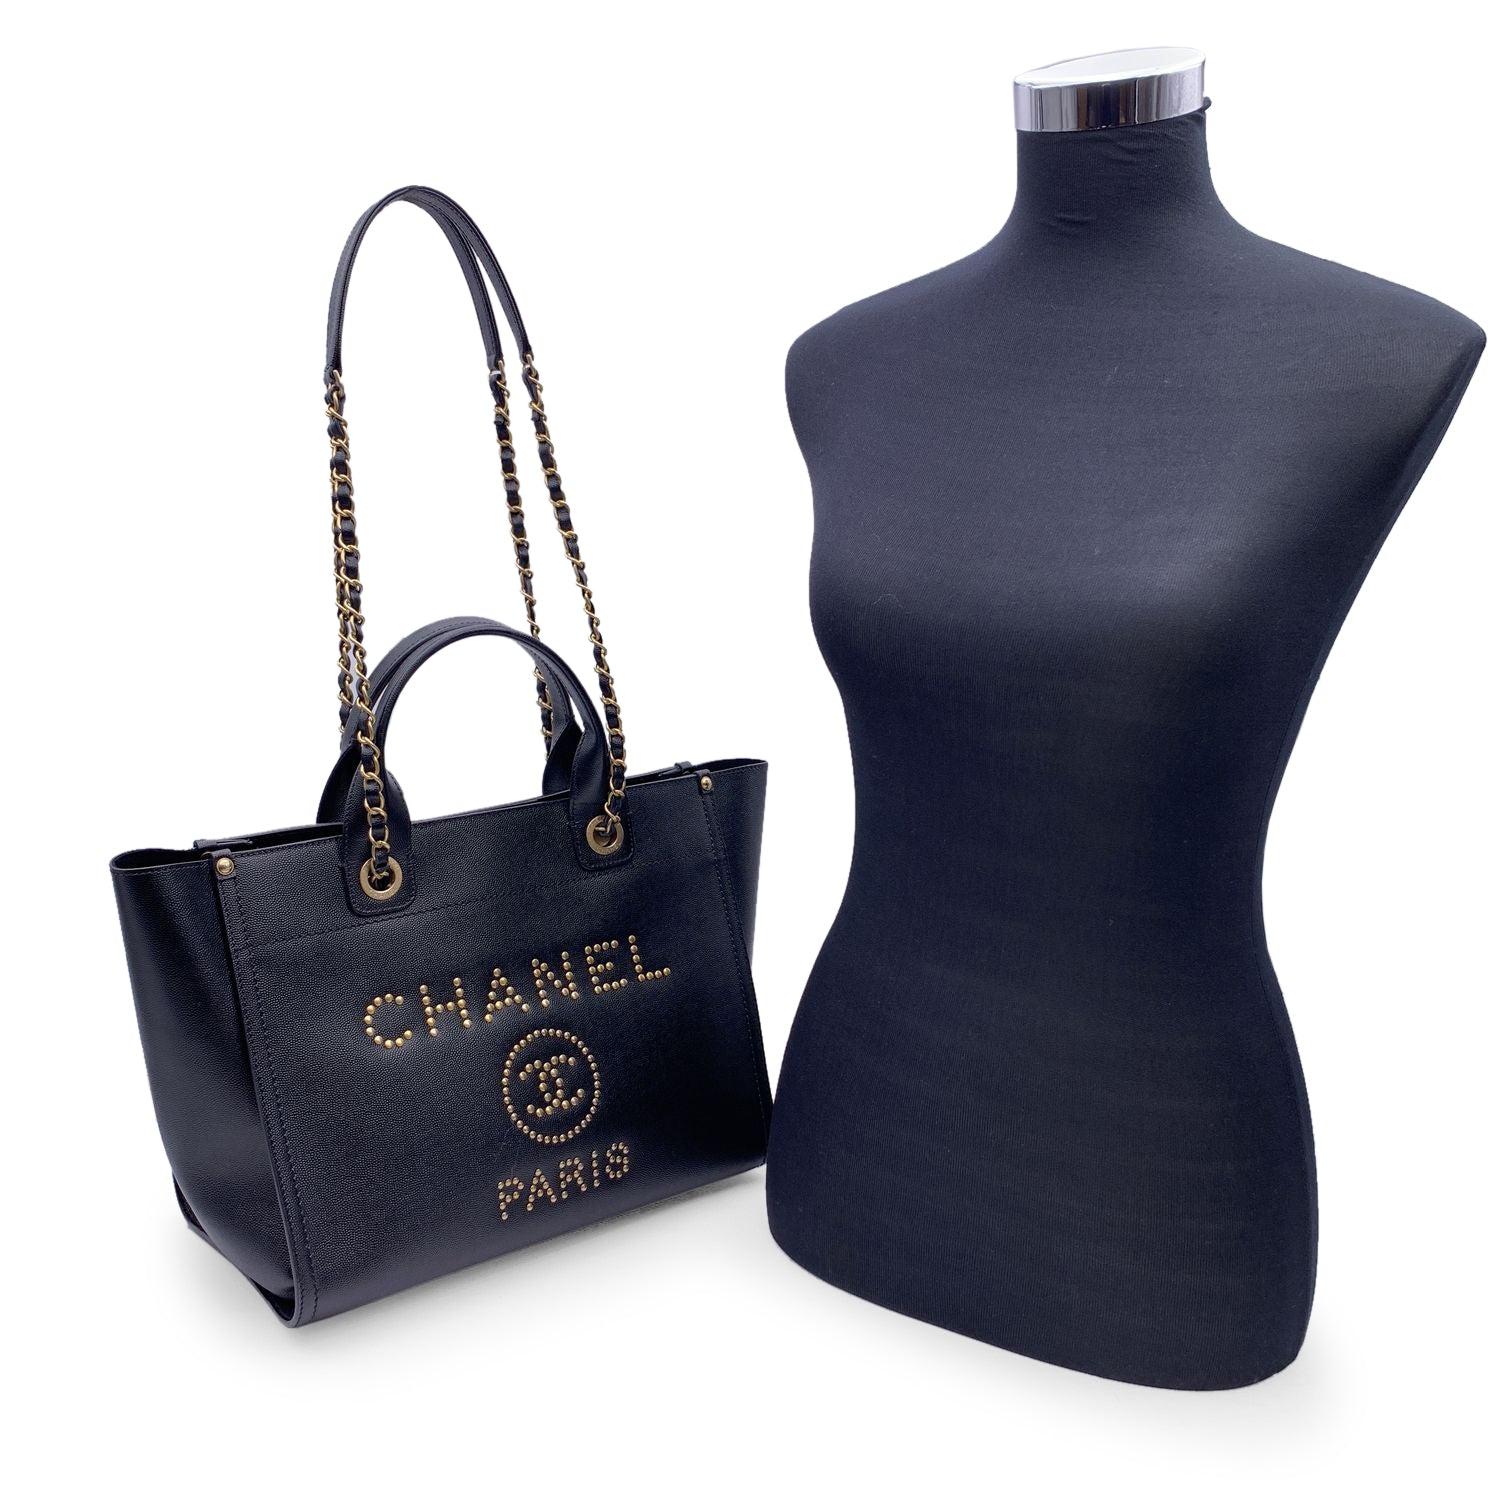 Chanel Black Caviar Leather Studded Deauville Tote Shoulder Bag 4